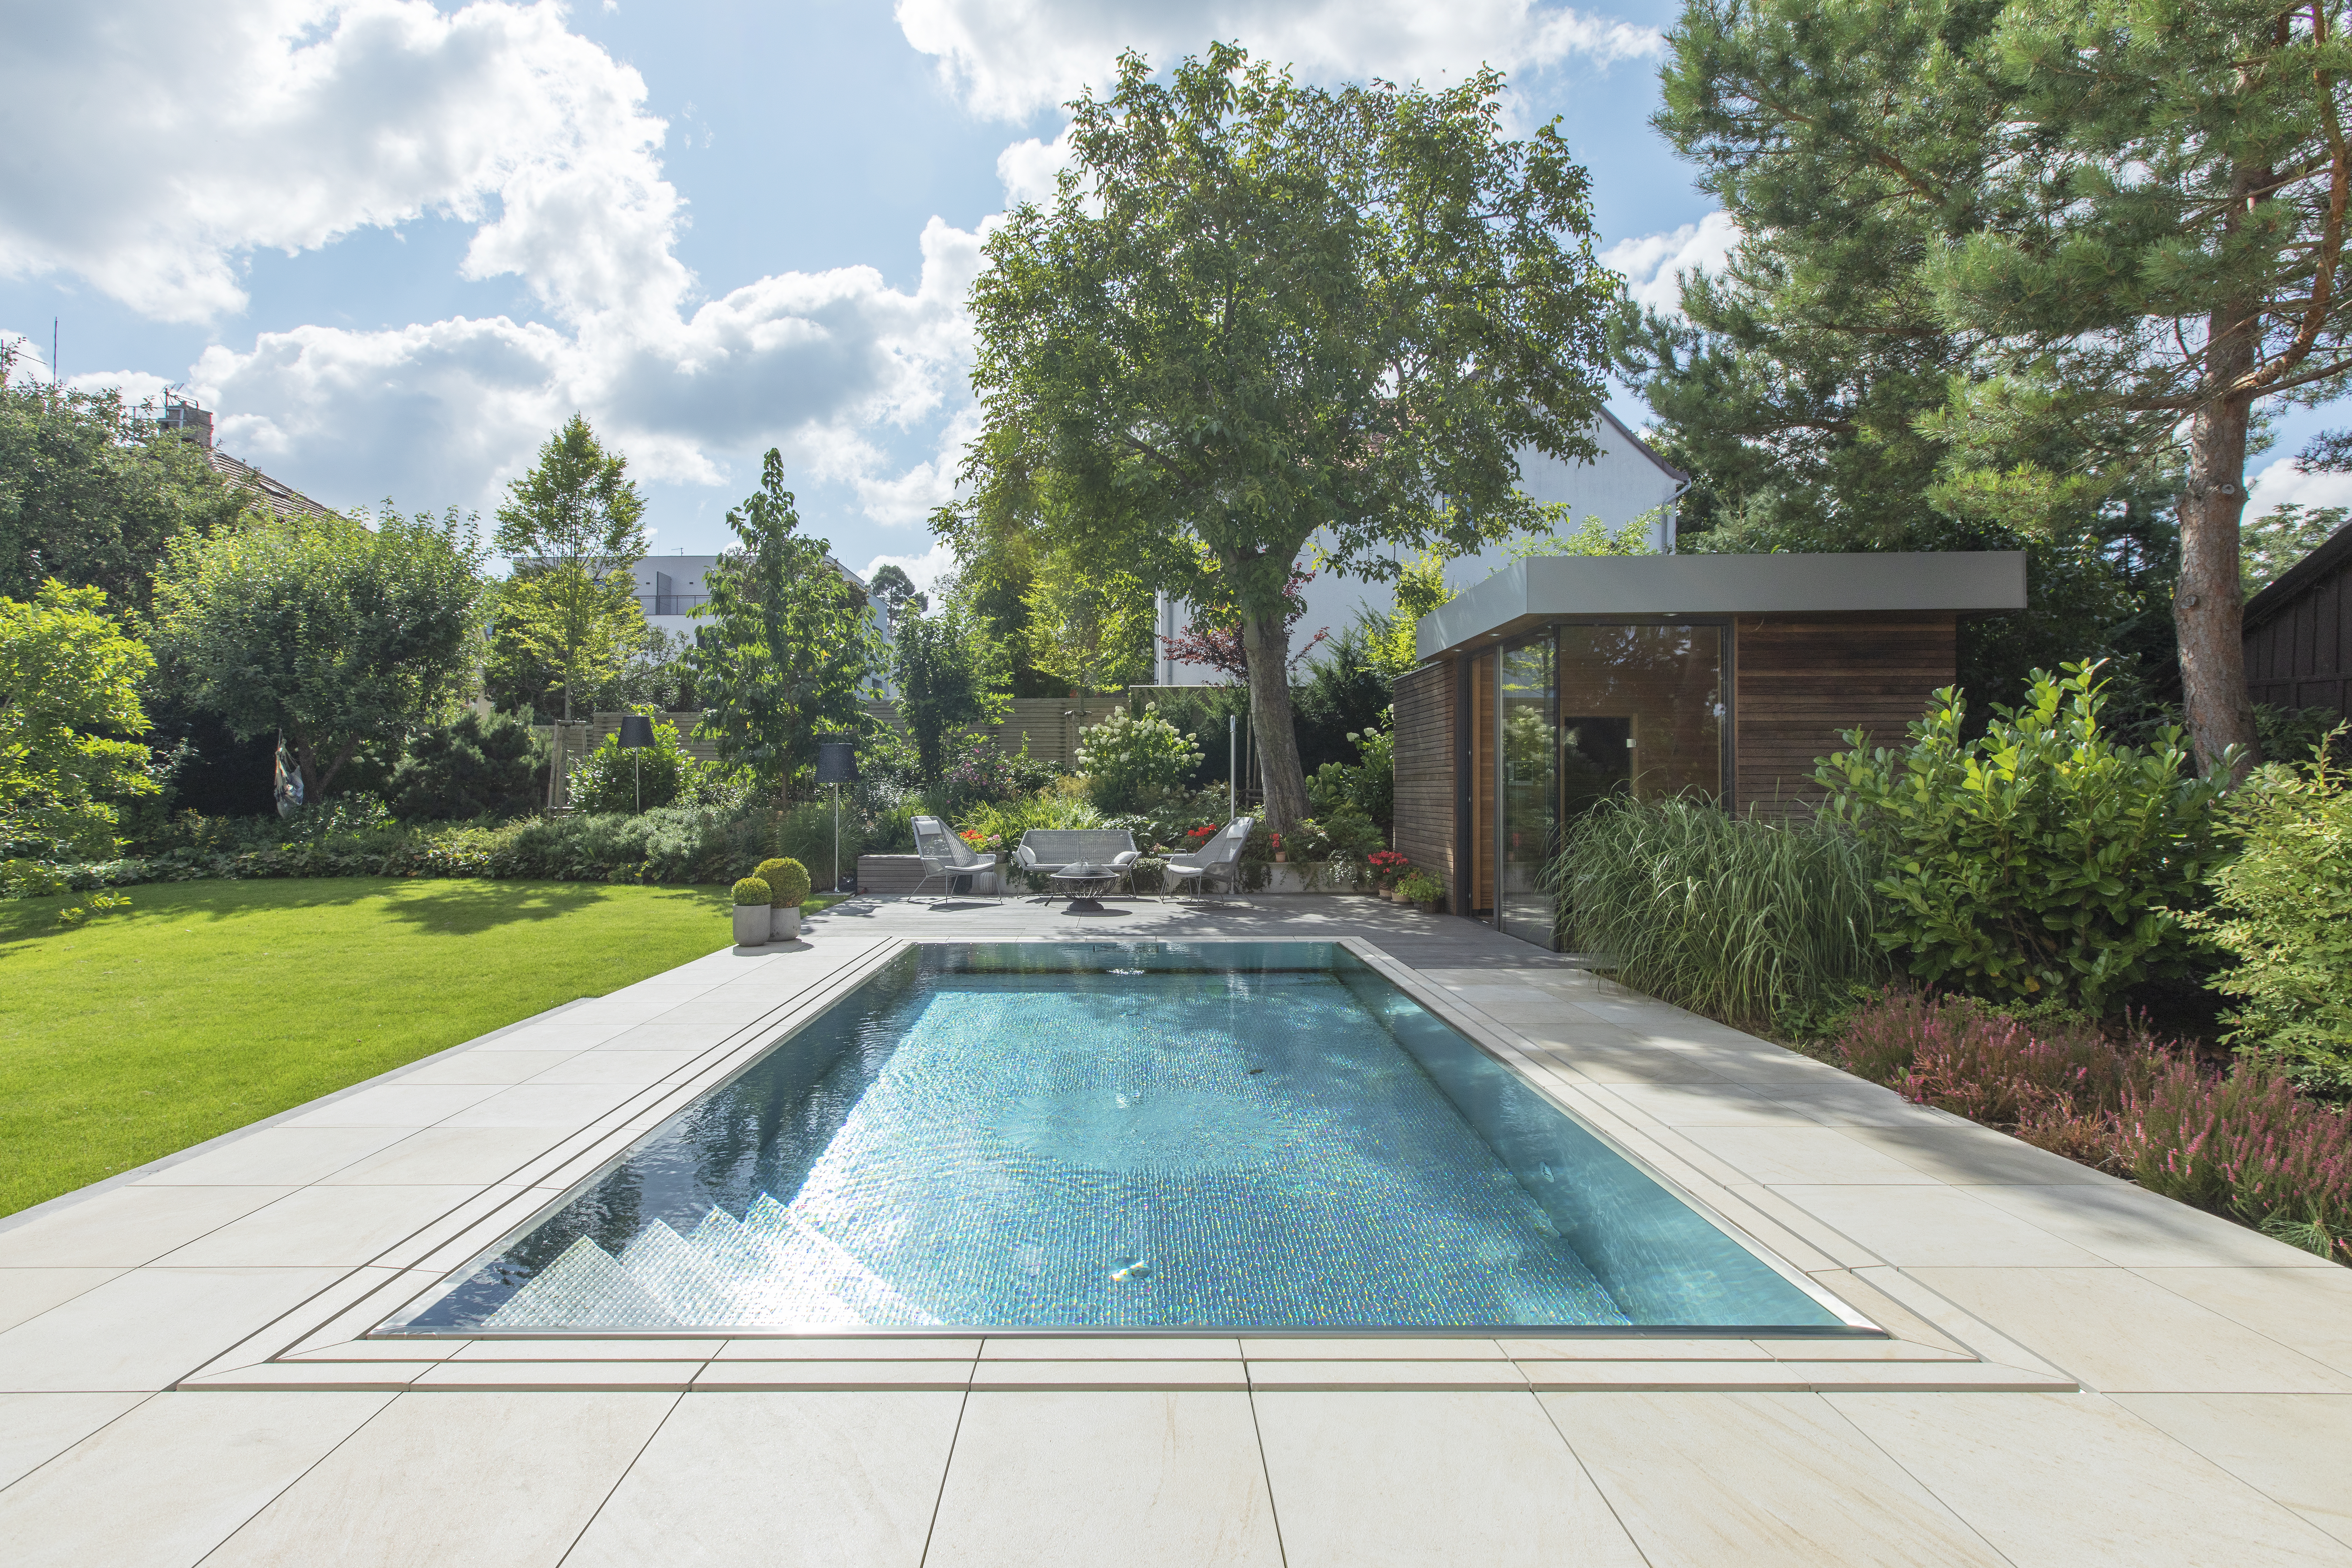 Exclusive modern pool IMAGINOX with luxury design